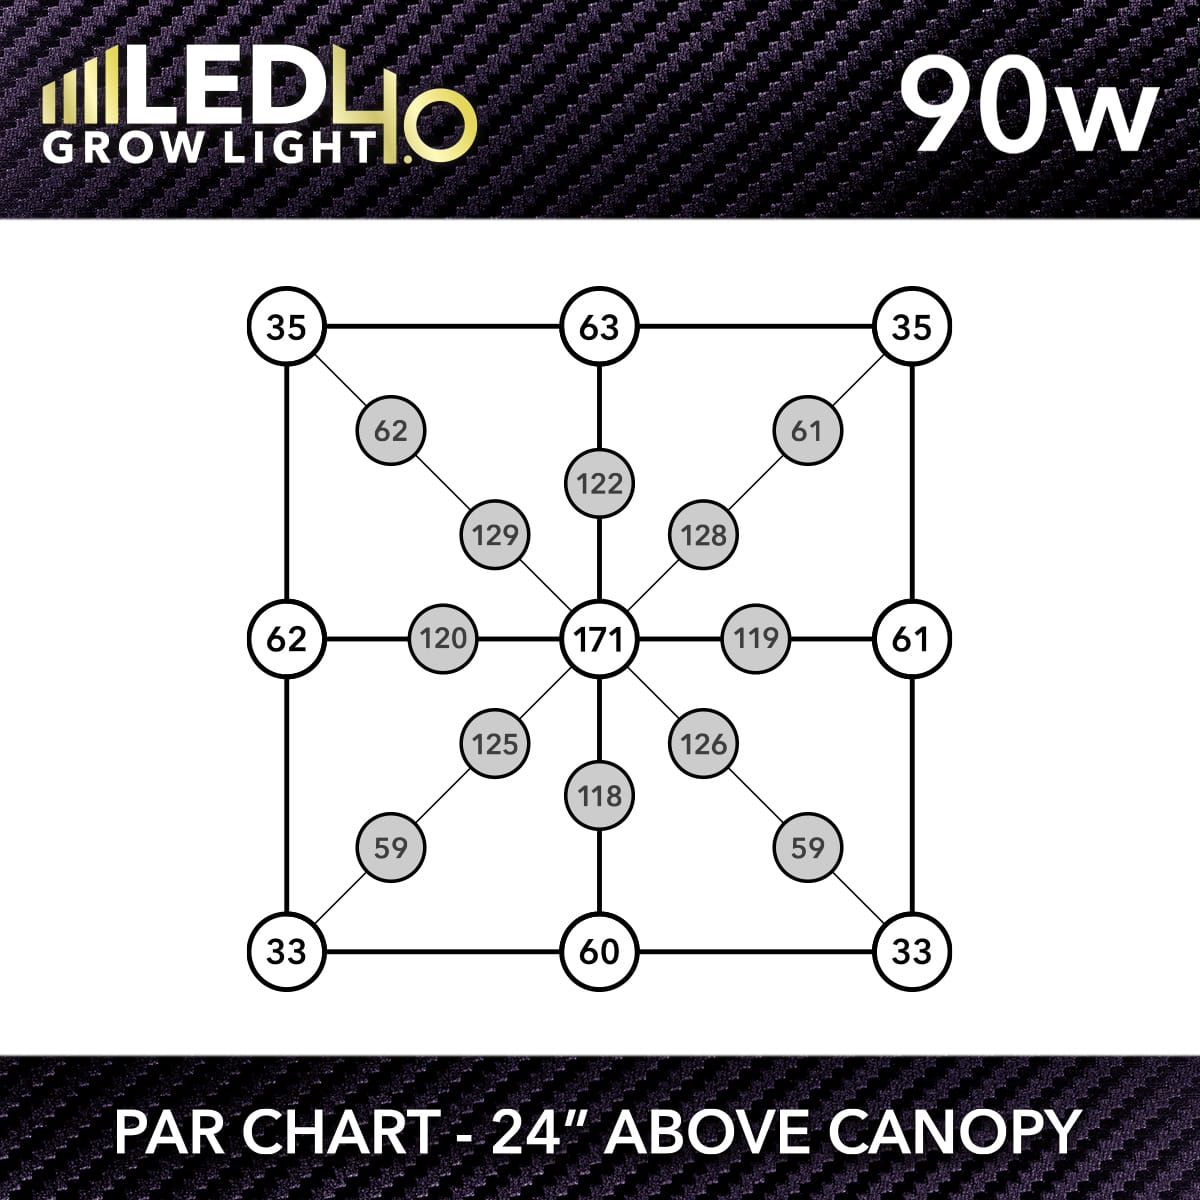 HTG Supply Model 4.0 90w LED Grow Light PPFD Chart